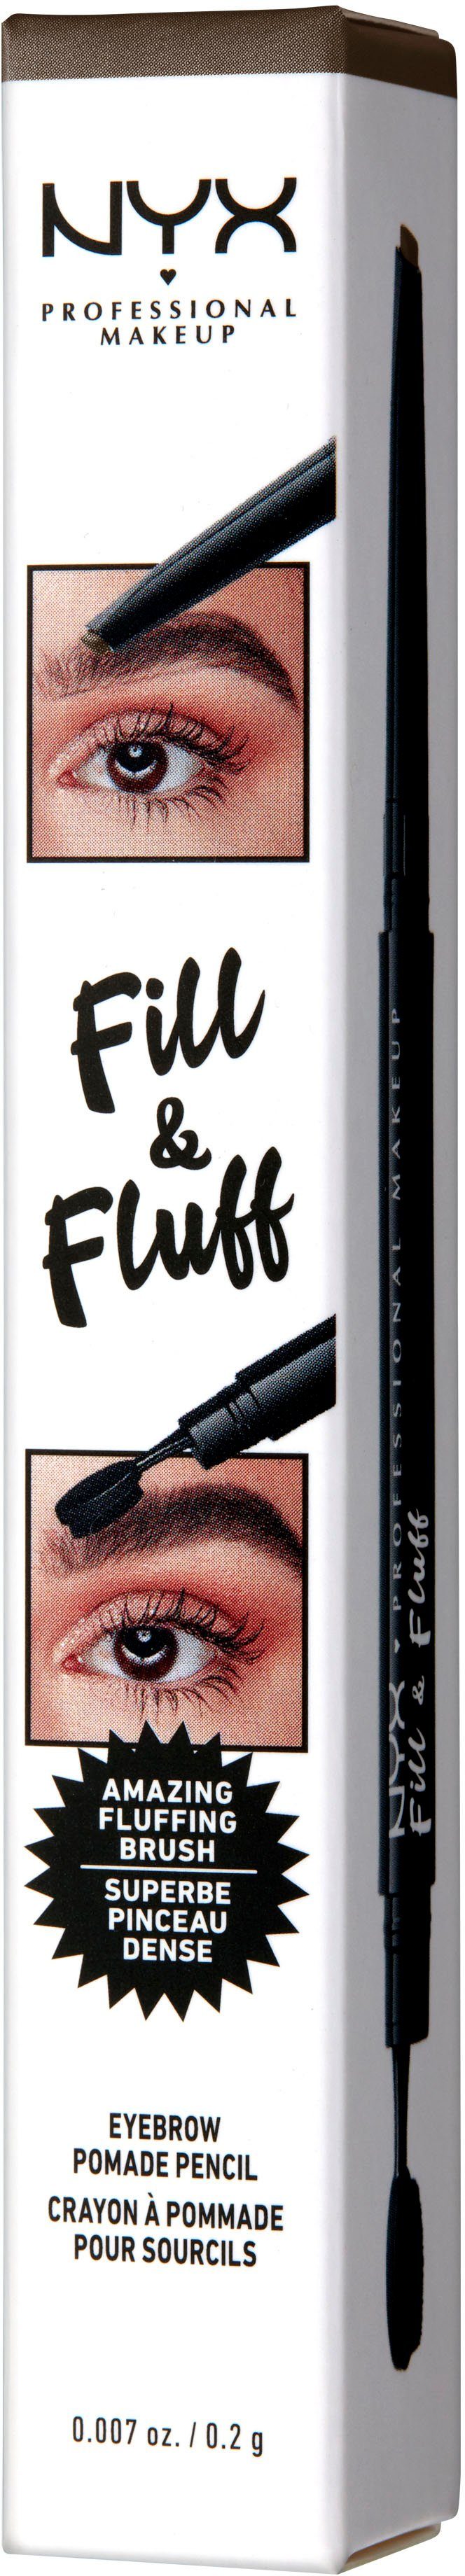 NYX Augenbrauen-Stift Professional Makeup & Eyebrow Fill ash brown Fluff Pomade Pencil